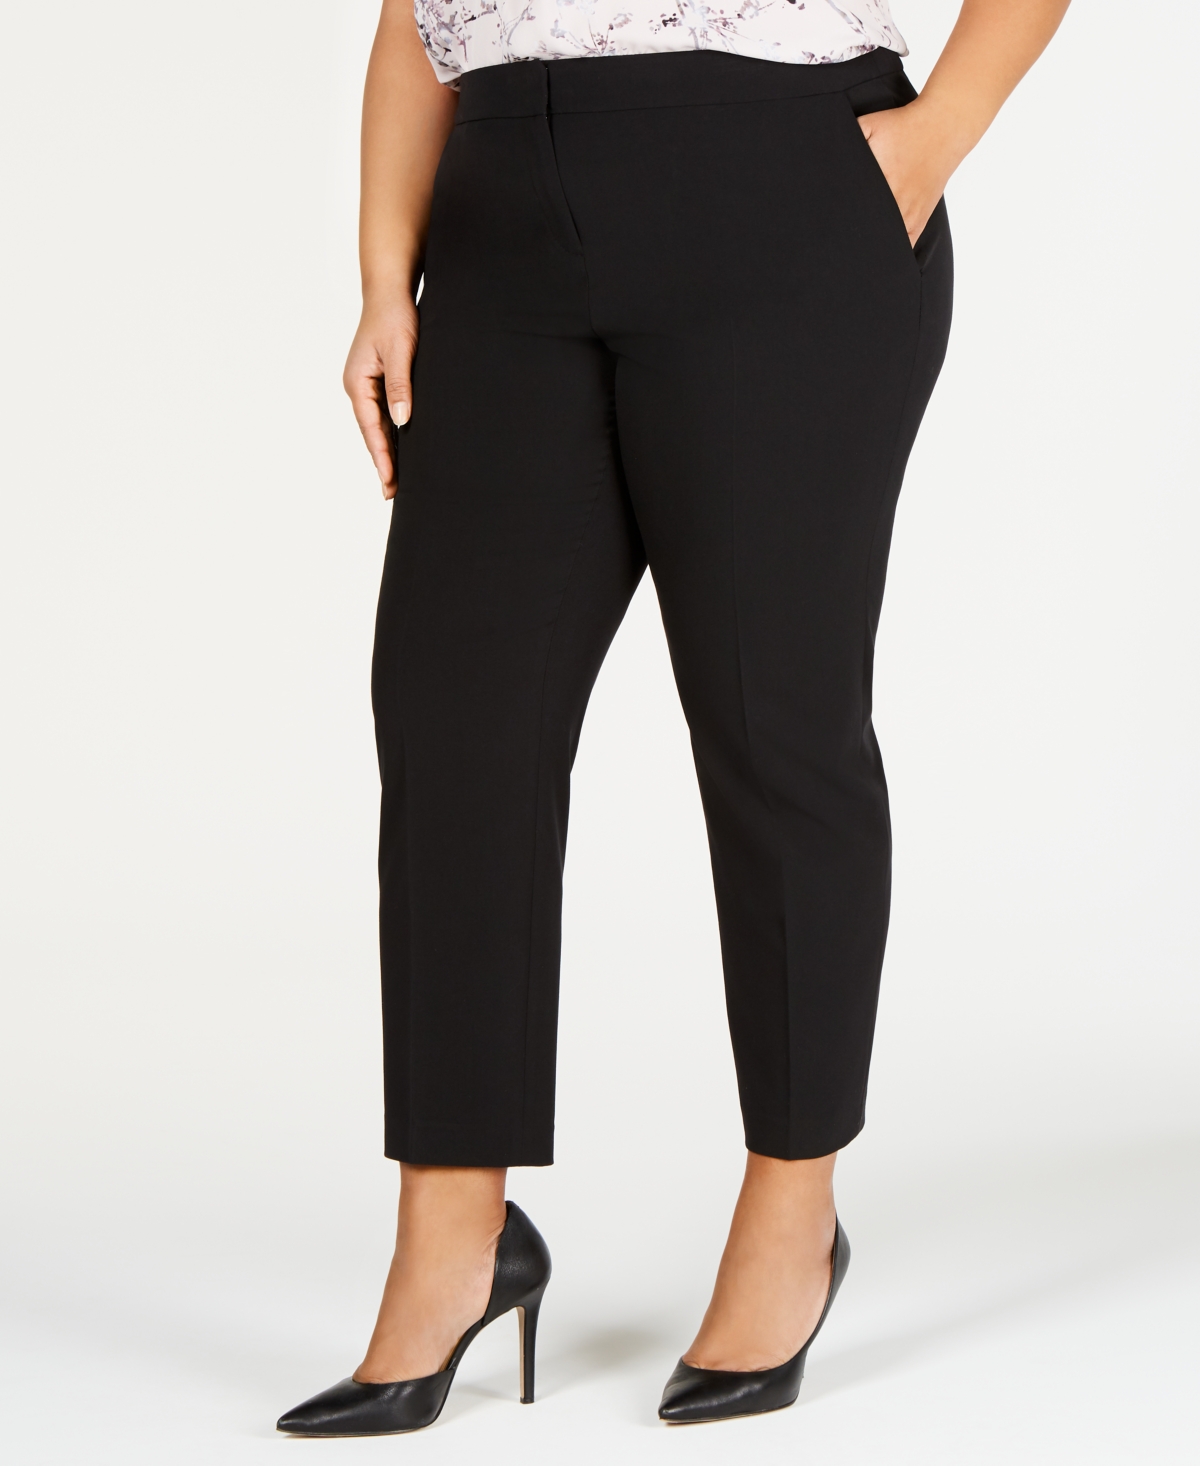  Bar Iii Trendy Plus Size Dress Pants, Created for Macy's